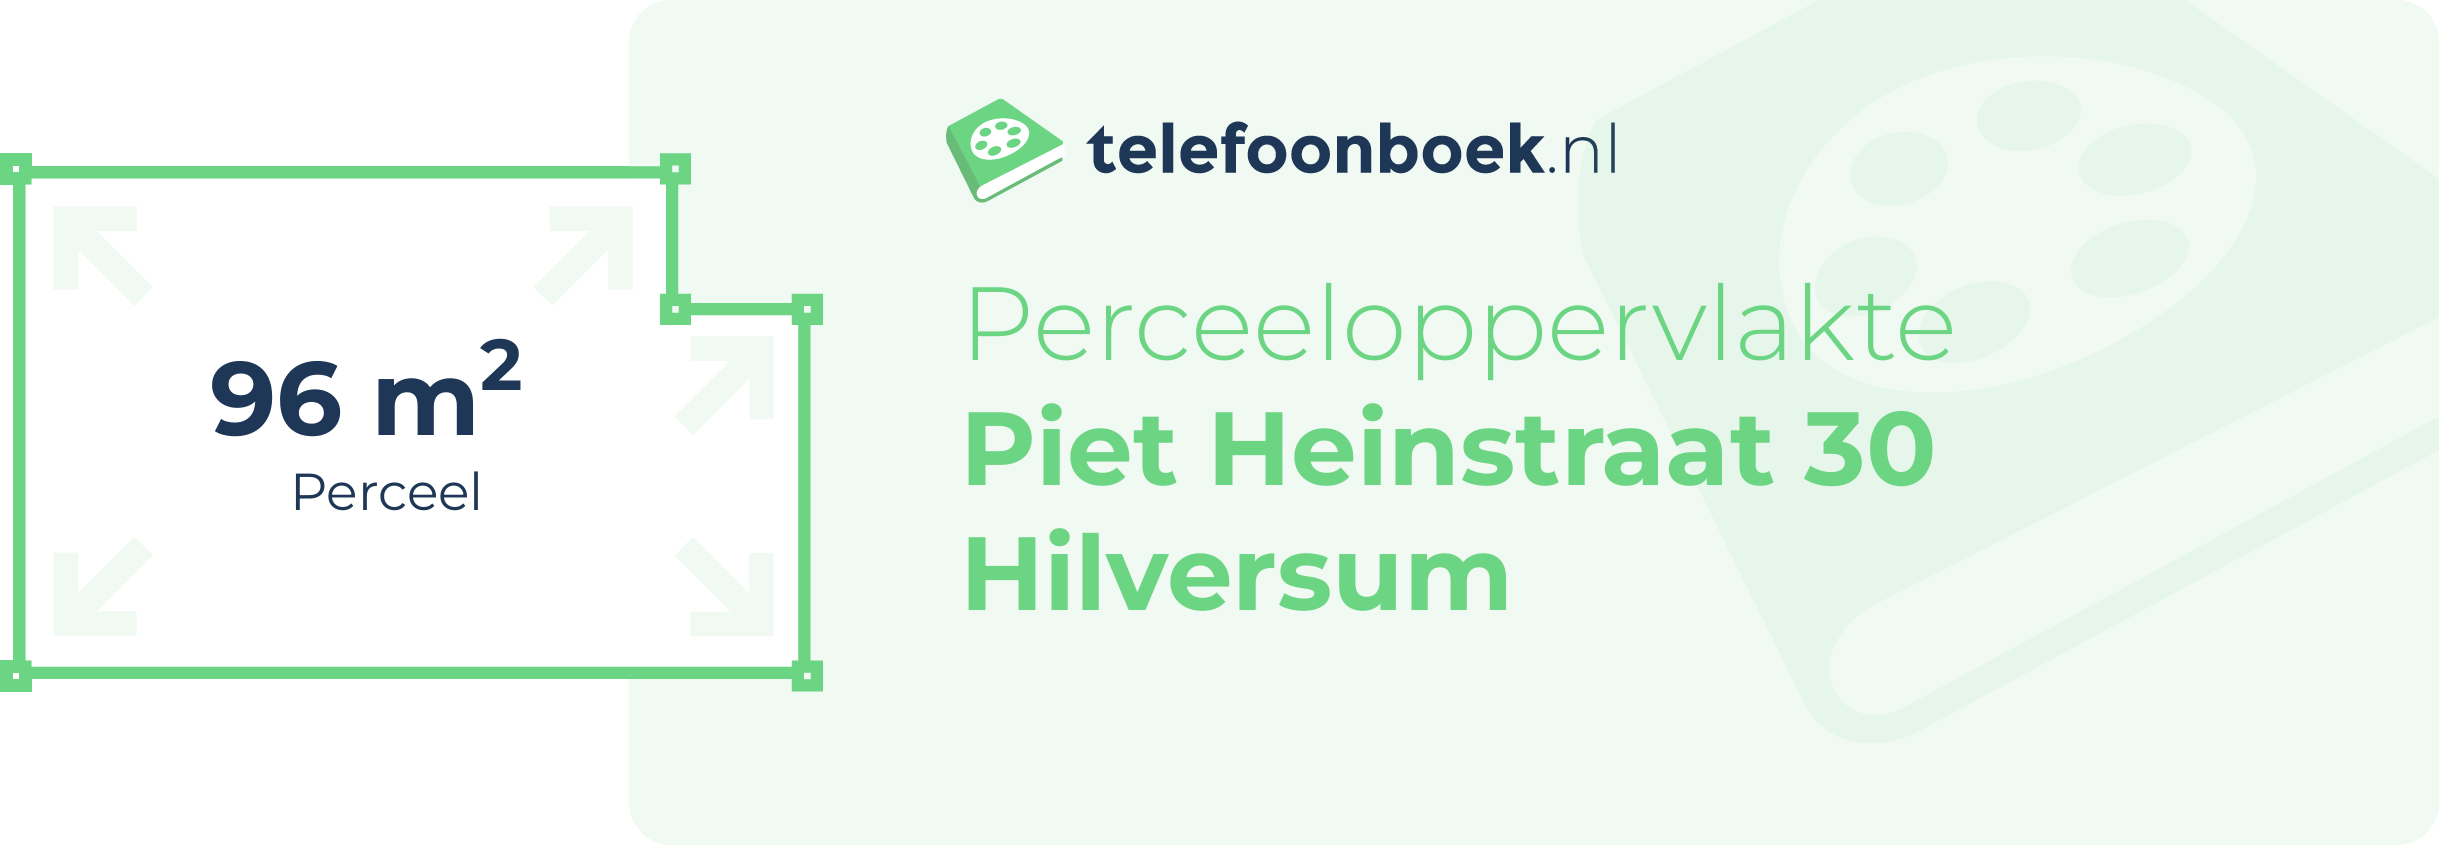 Perceeloppervlakte Piet Heinstraat 30 Hilversum